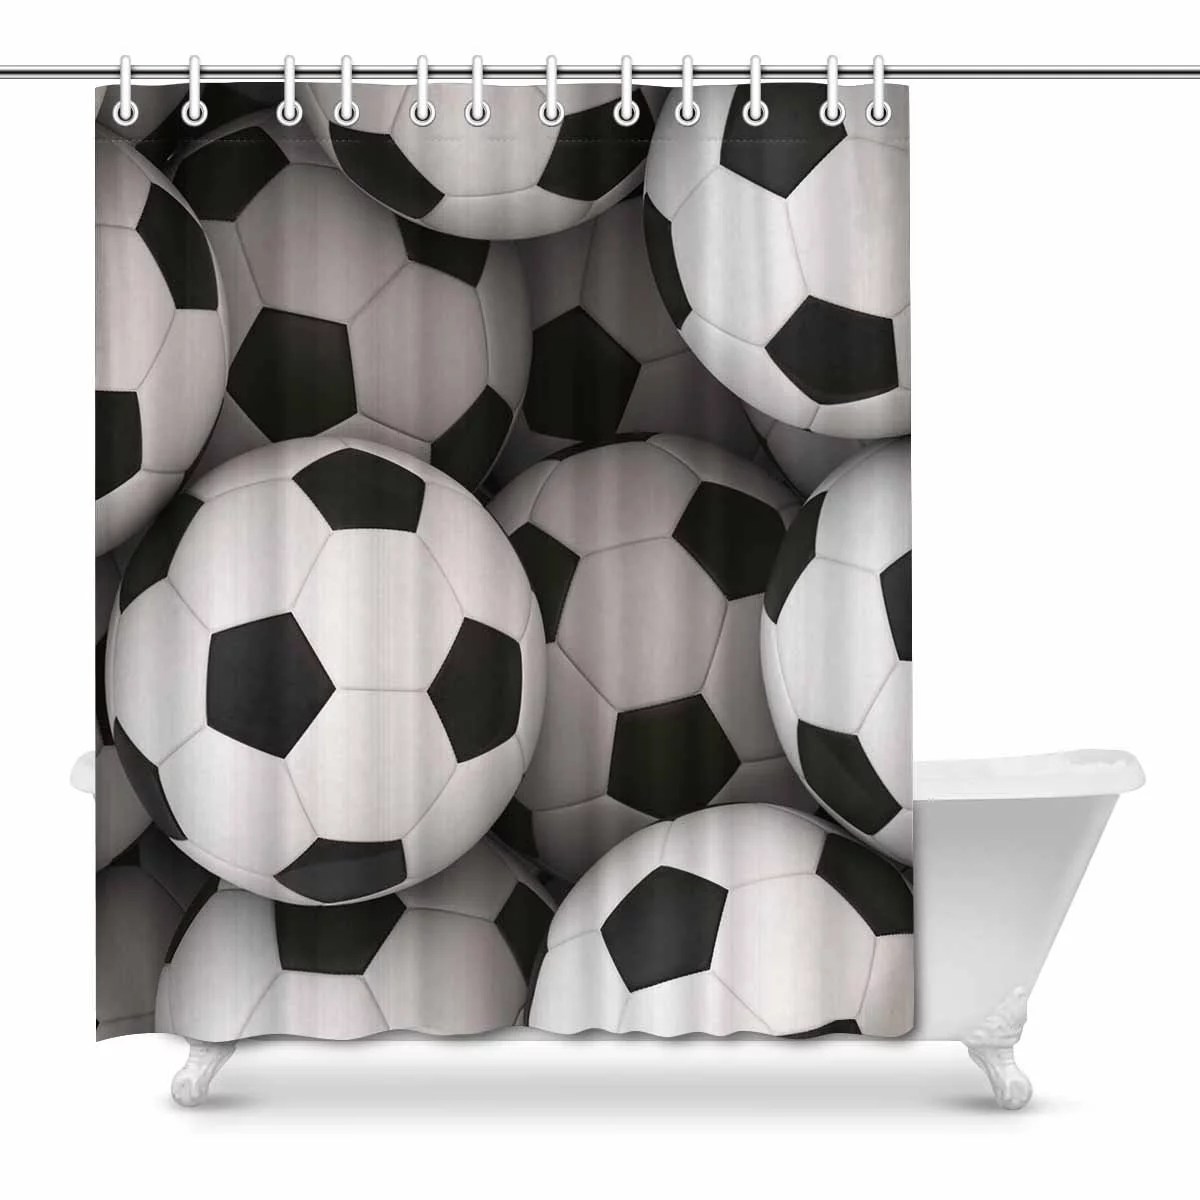 MKHERT Sports Decor Soccer Ball Home Decor Waterproof Polyester